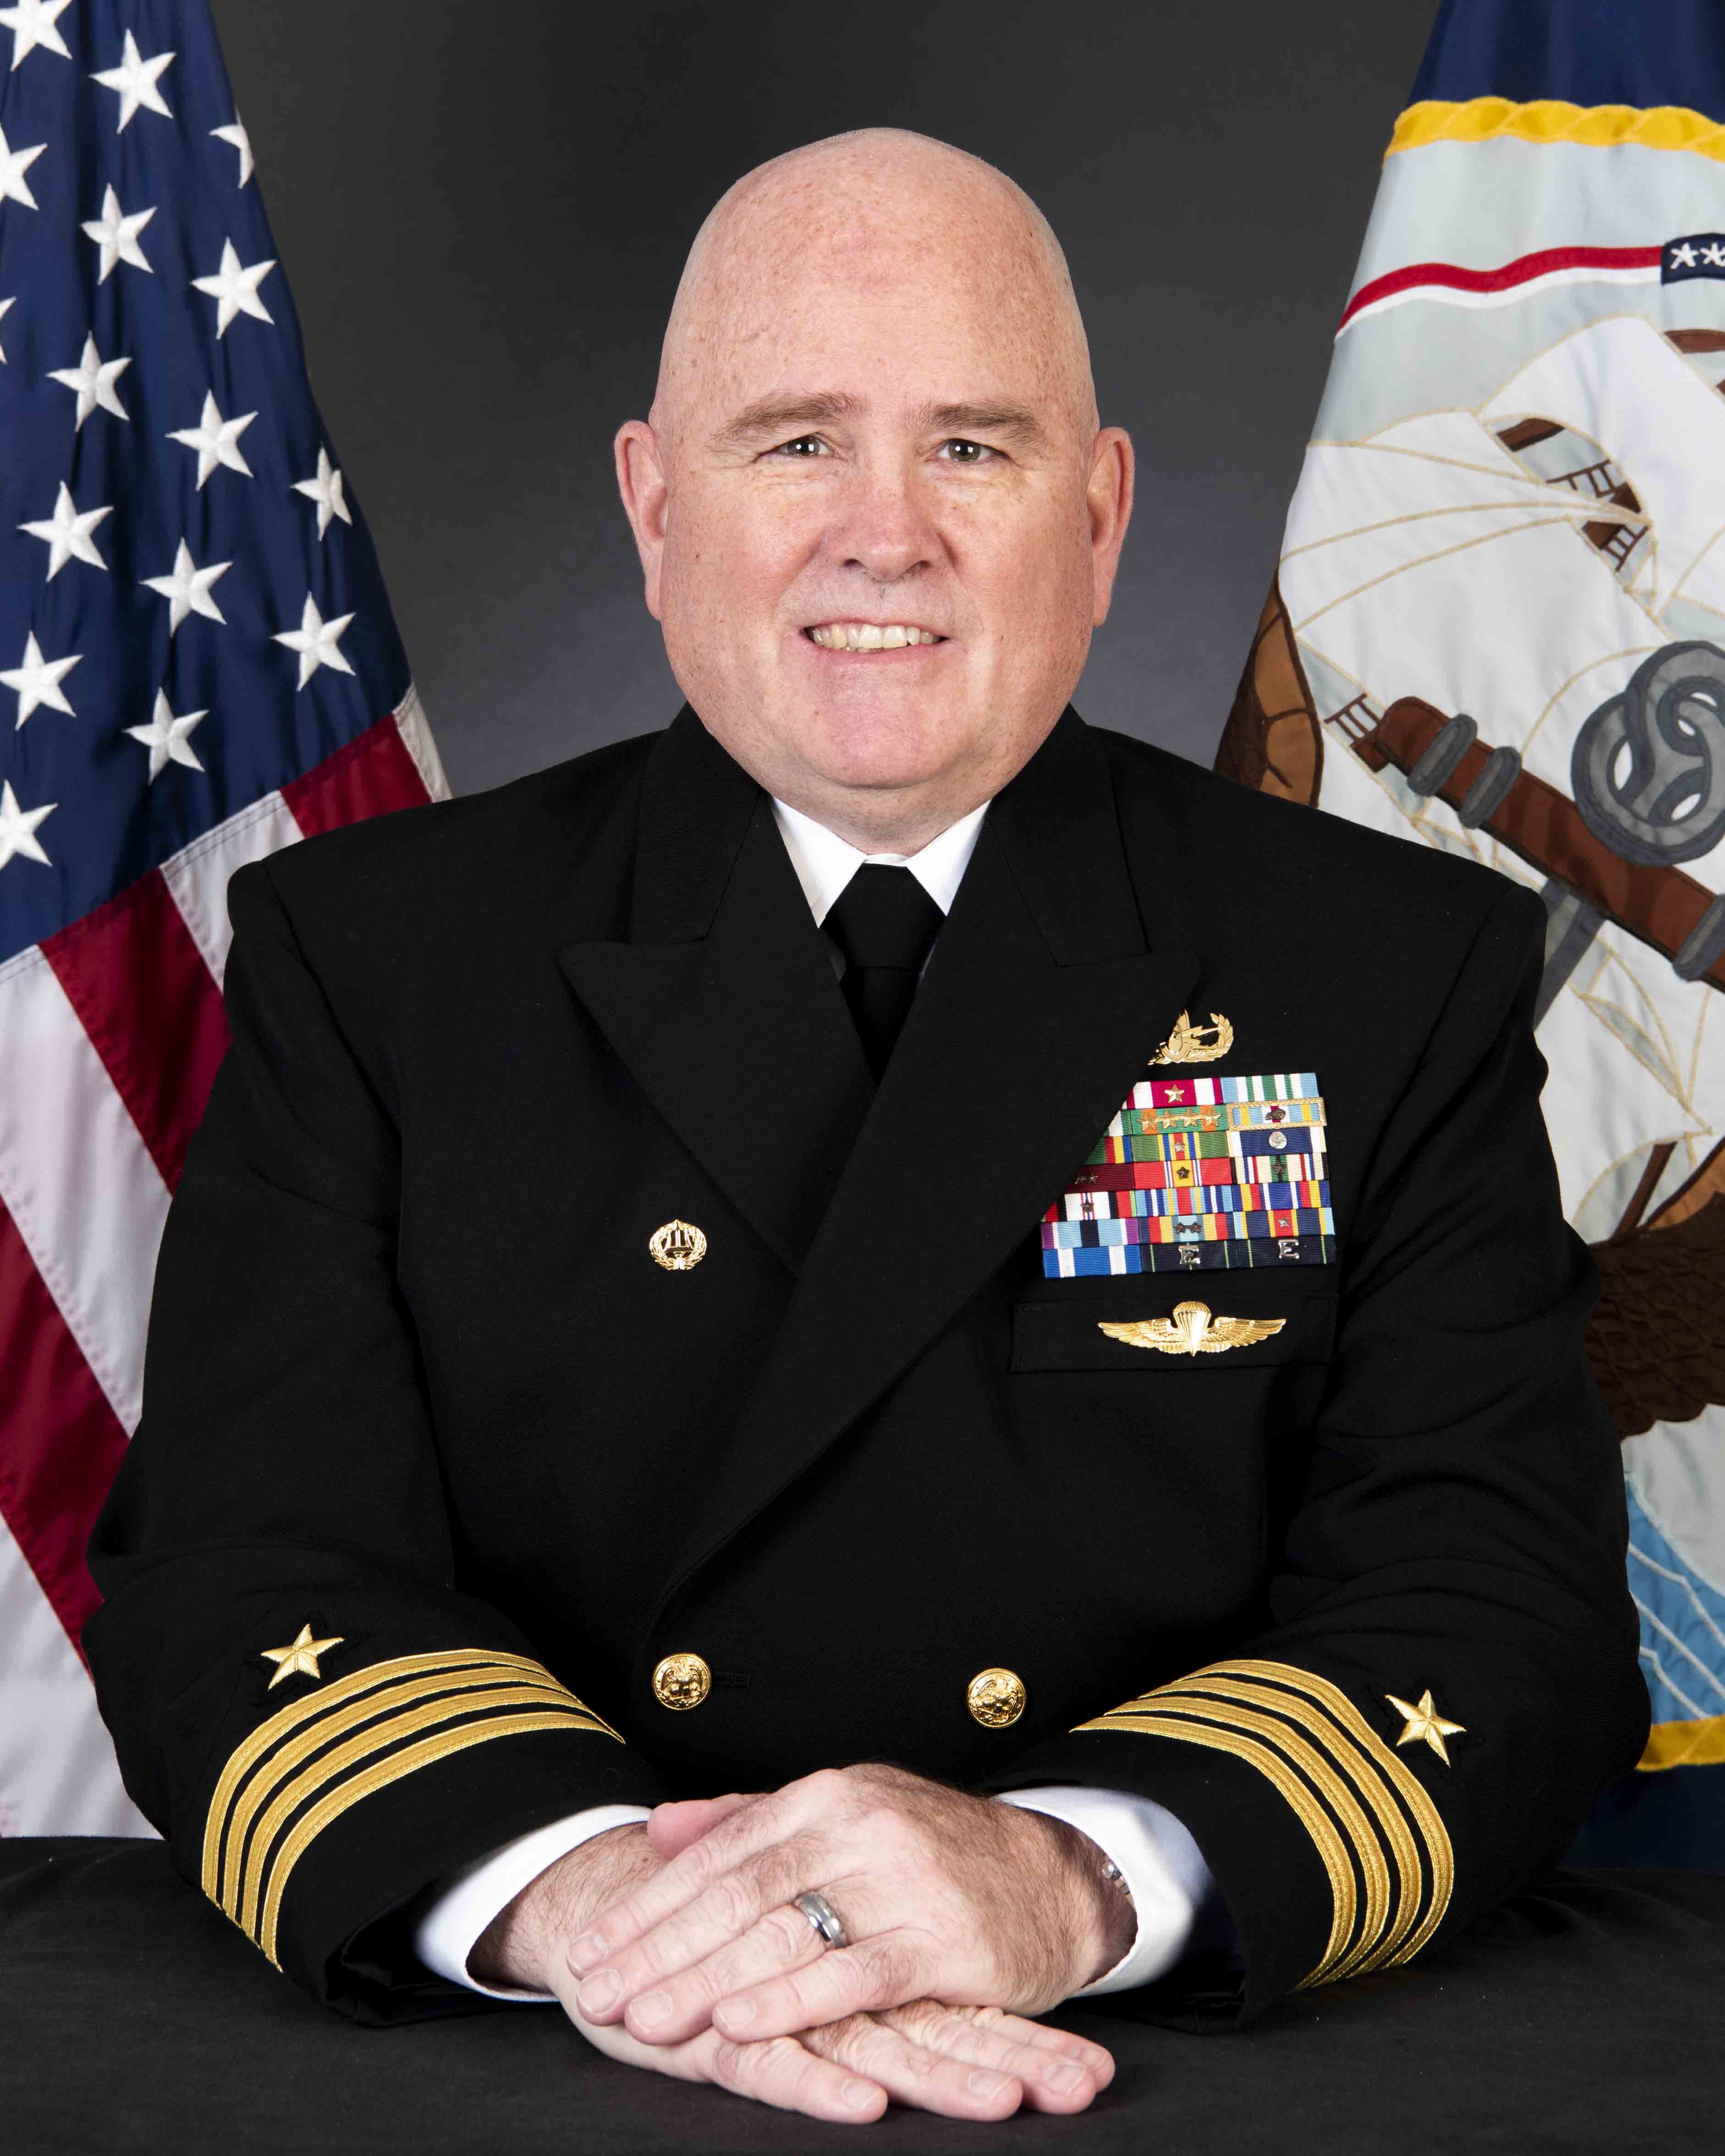 Captain David K. Blauser, Commander, NOSSA